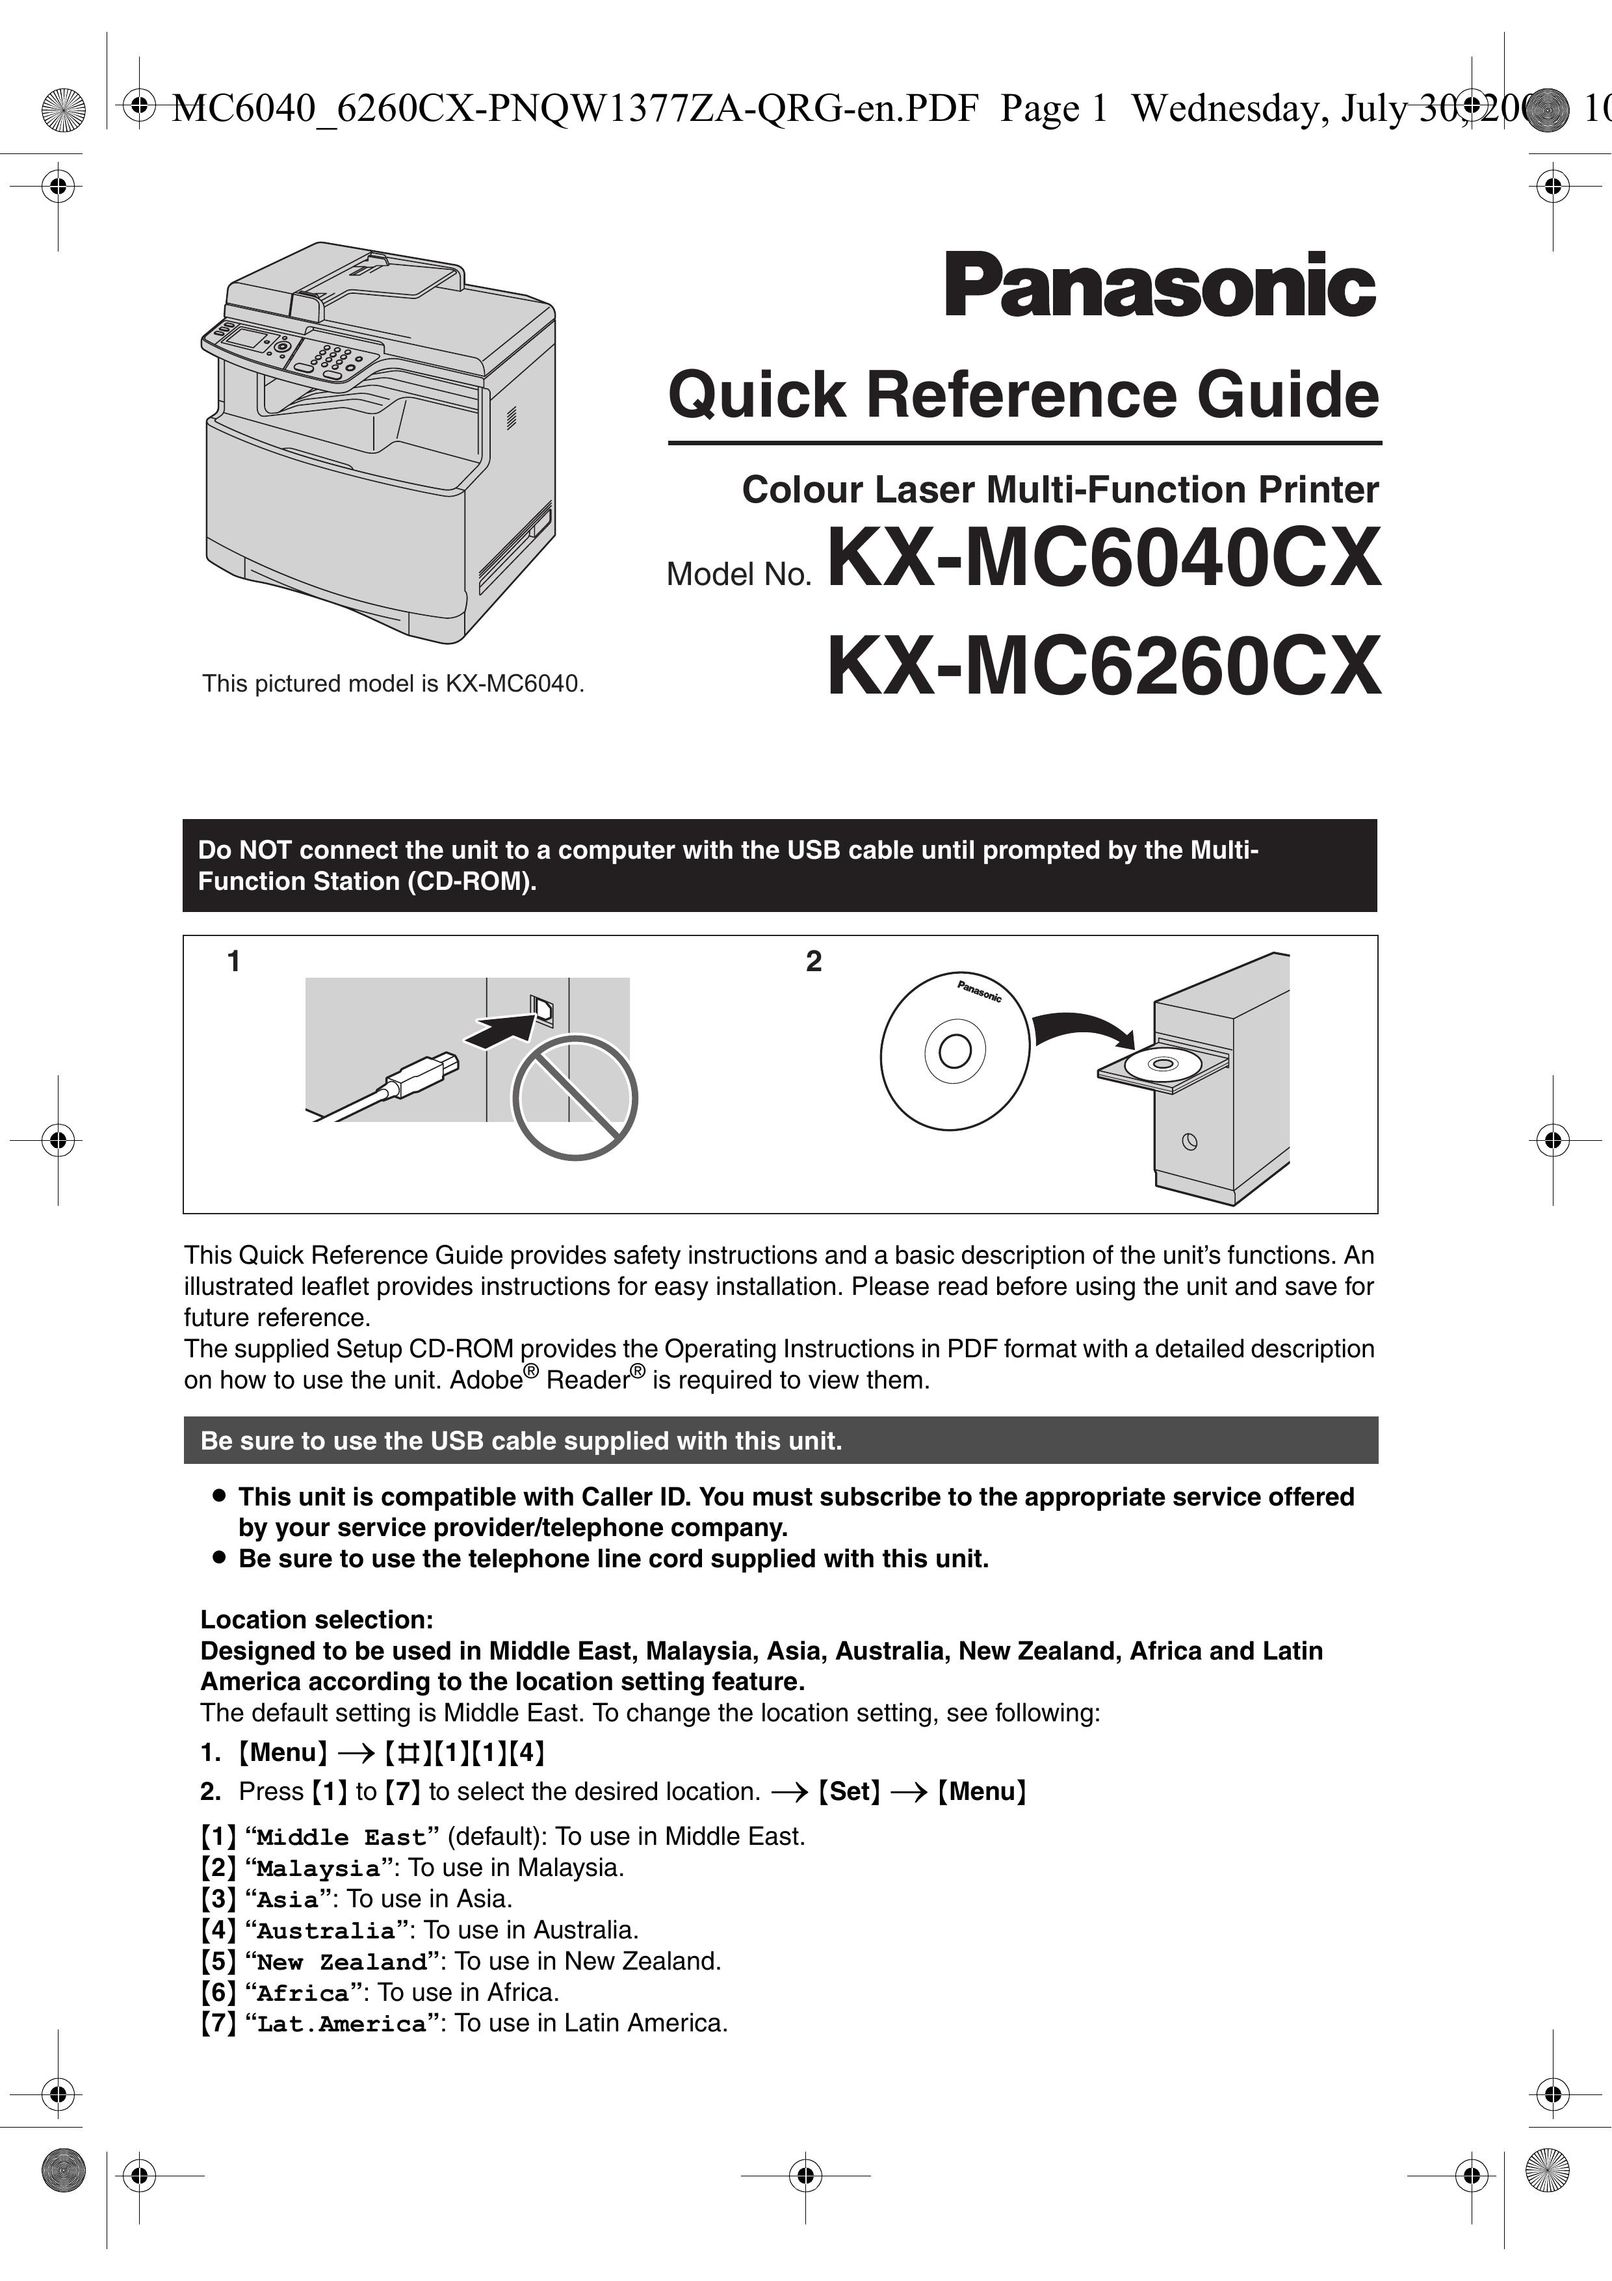 Panasonic KX-MC6260CX Printer User Manual